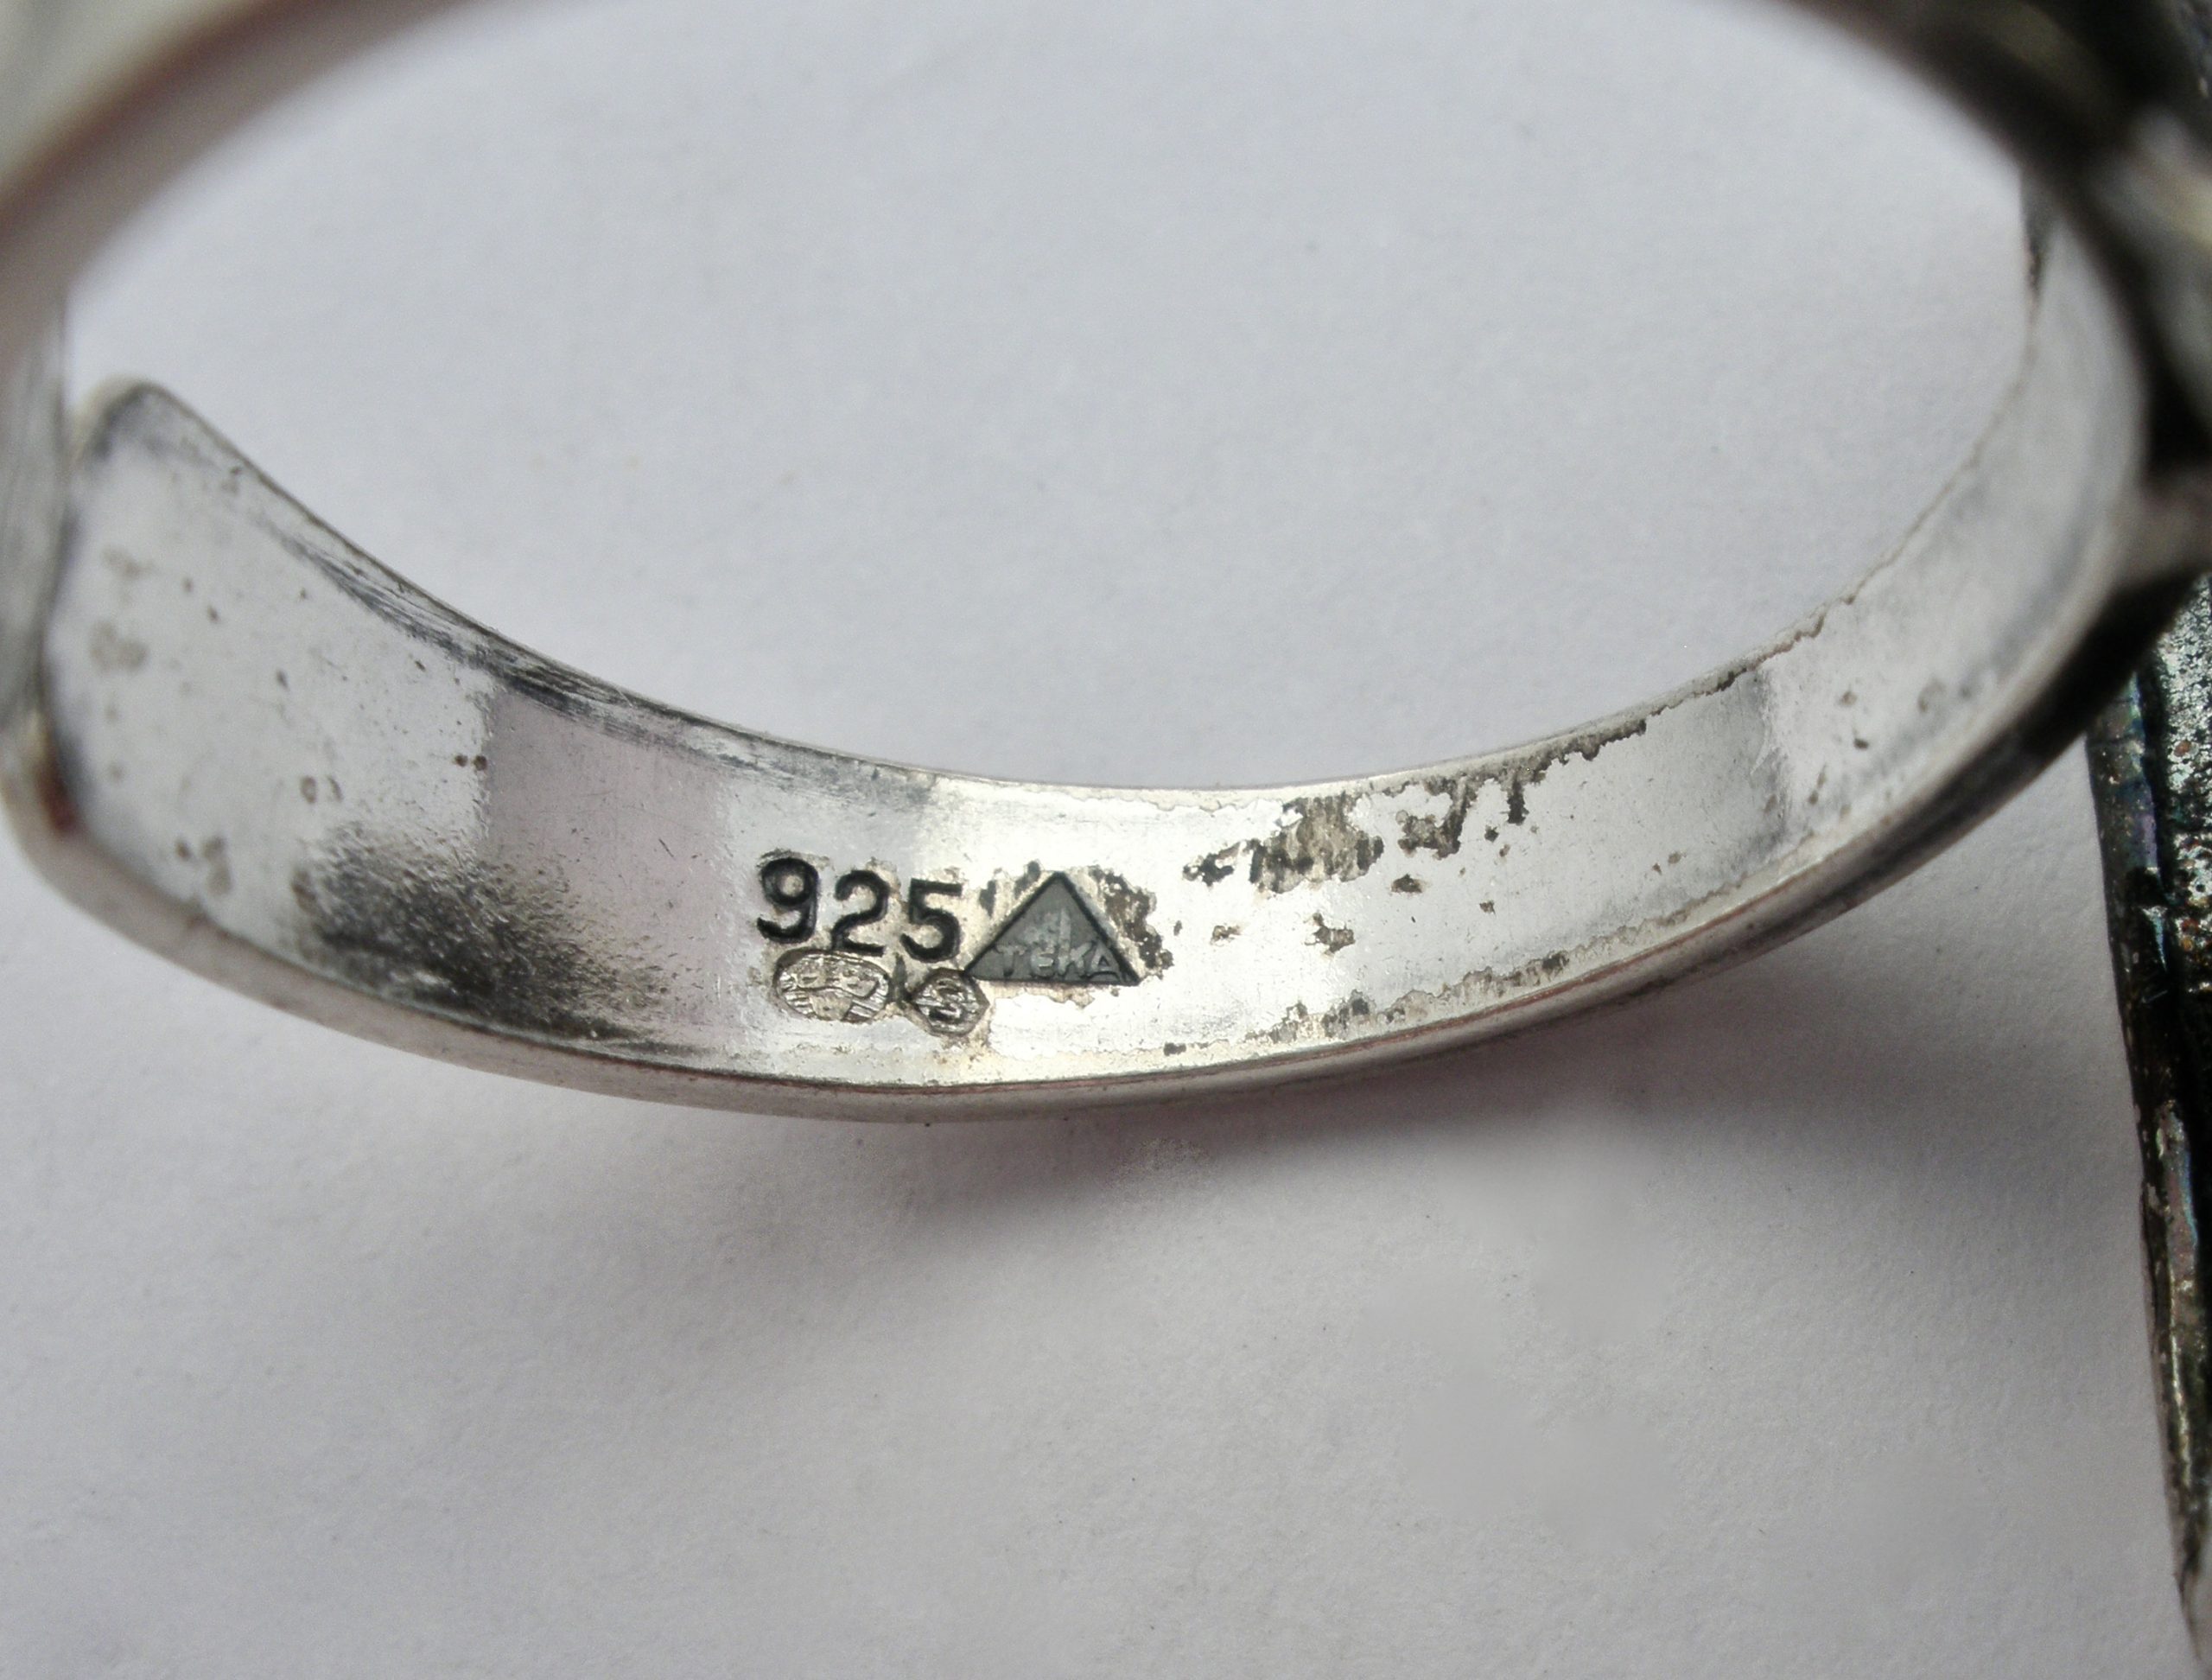 Teka, Theodor Klotz, silver cast ring, Germany, circa 1970 (Ref S499 ...